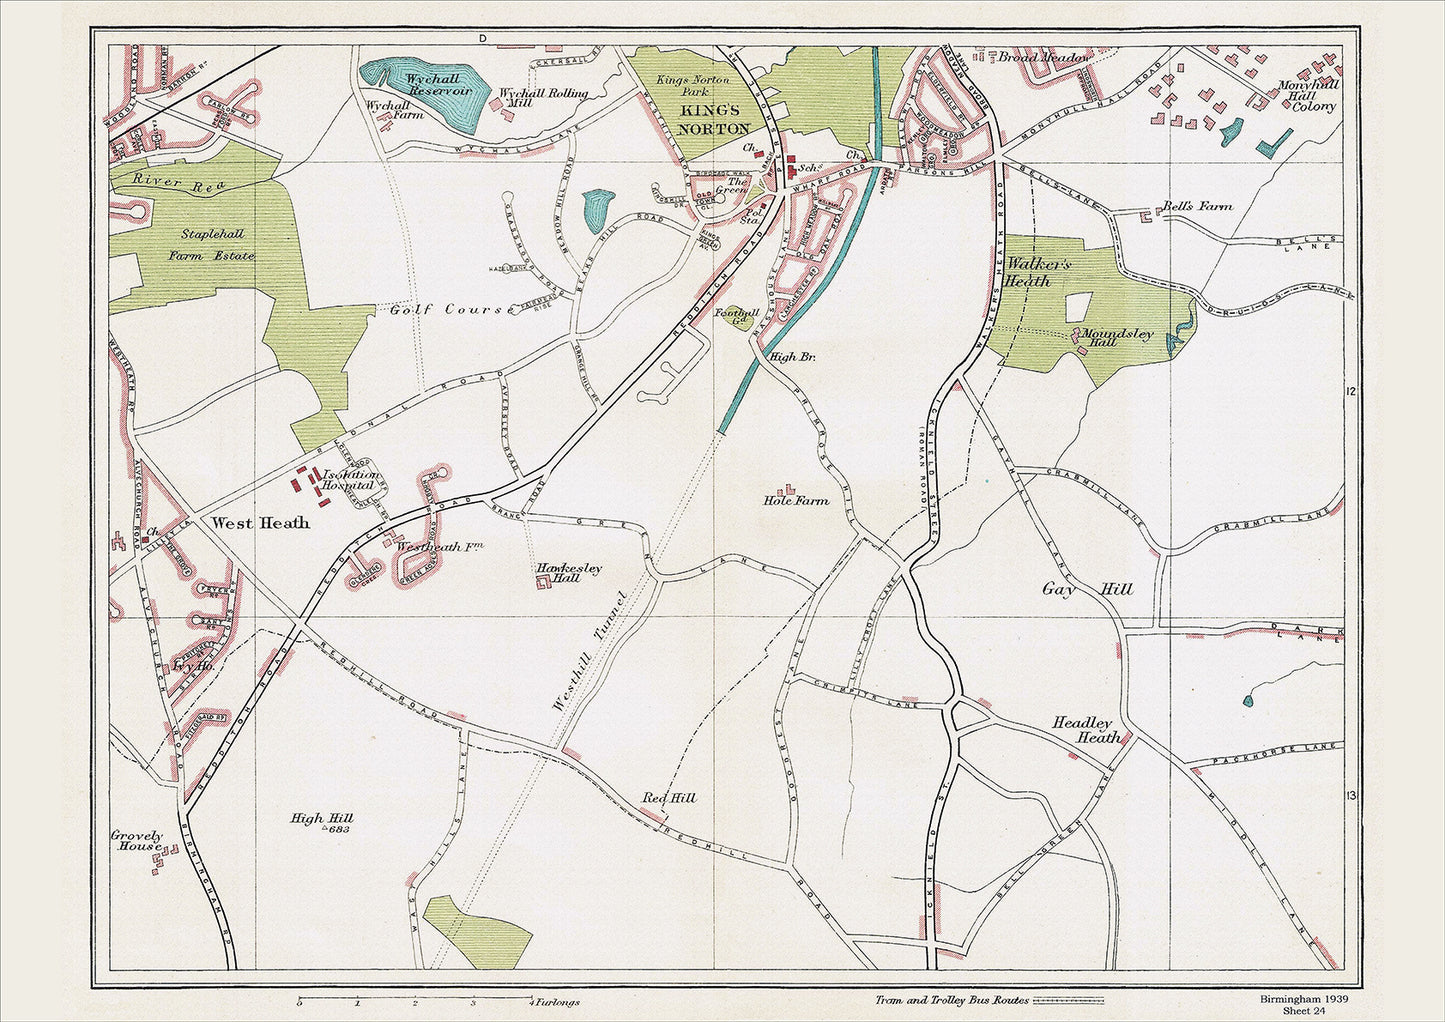 Birmingham in 1939 Series - Kings Norton, West Heath, Walkers Heath, Gay Hill, Headley Heath area (Bir1939-24)